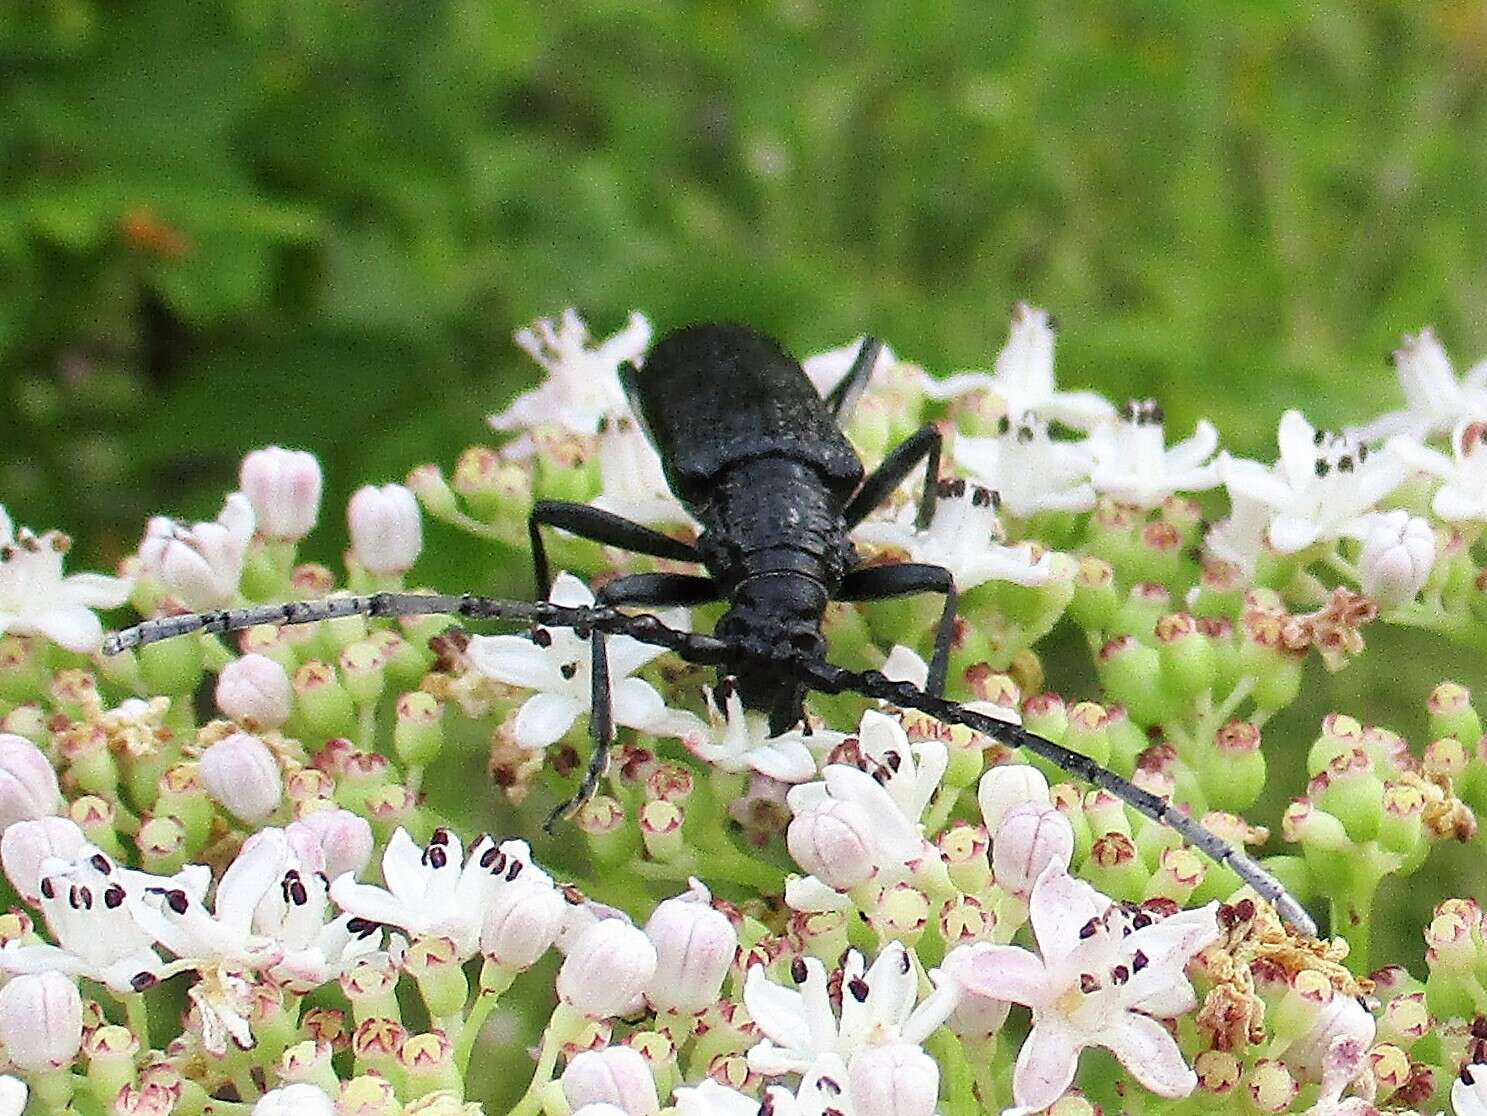 Image of capricorn beetle